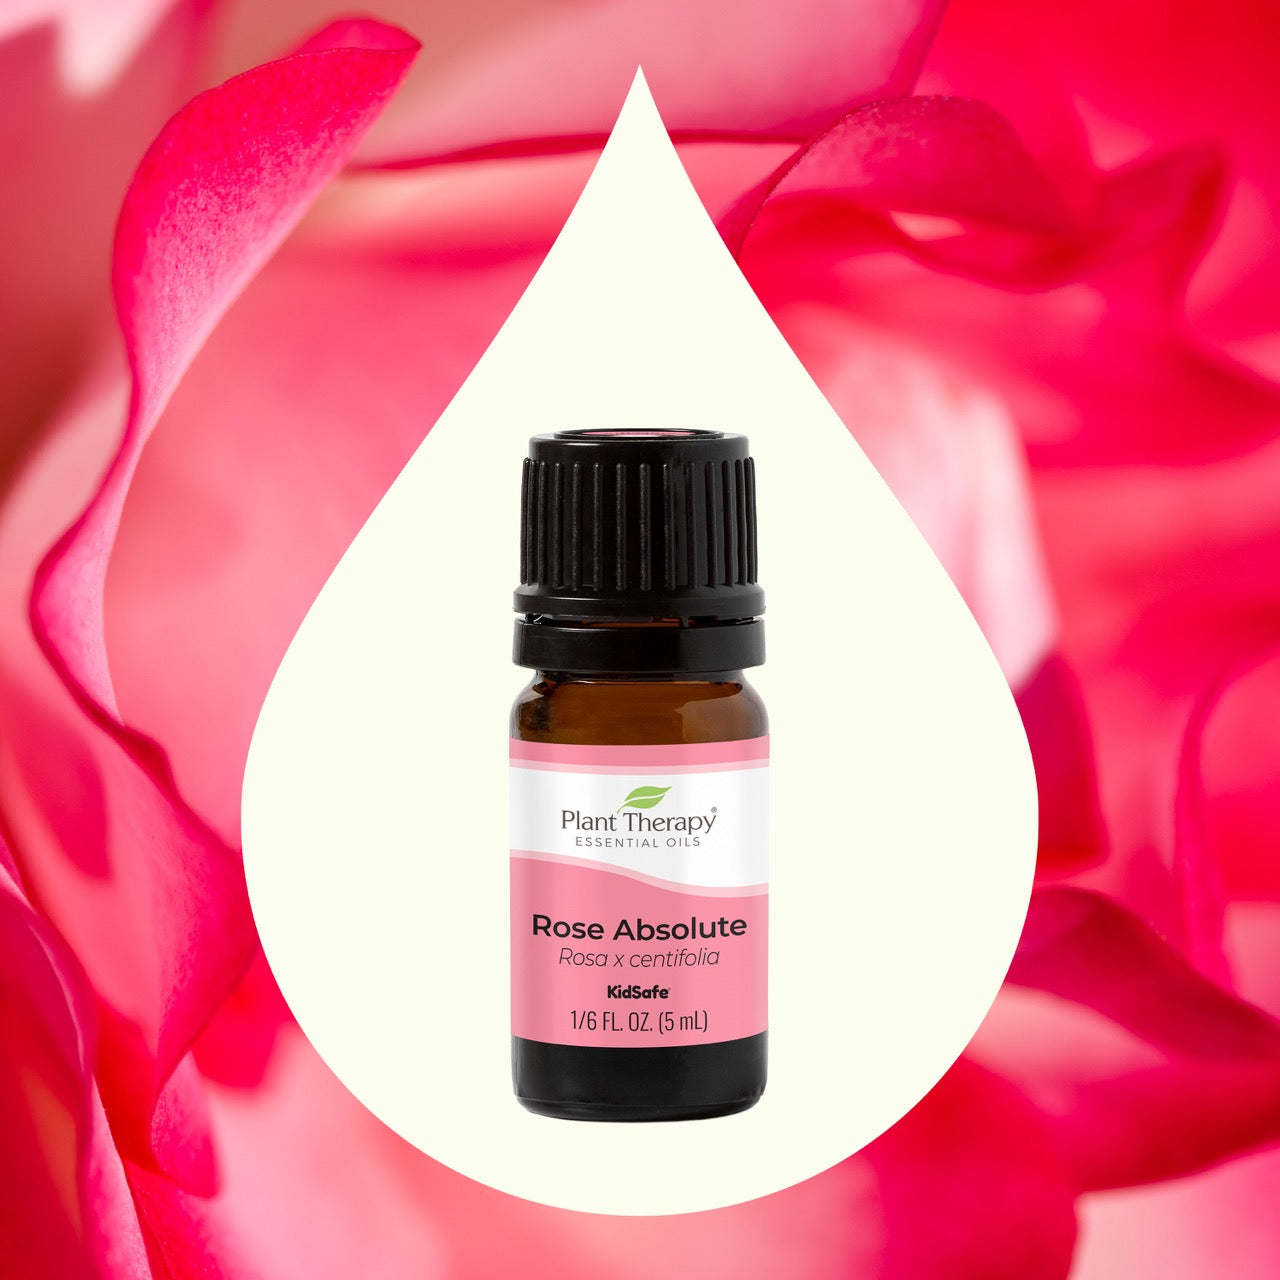 rose absolute essential oil ingredient image